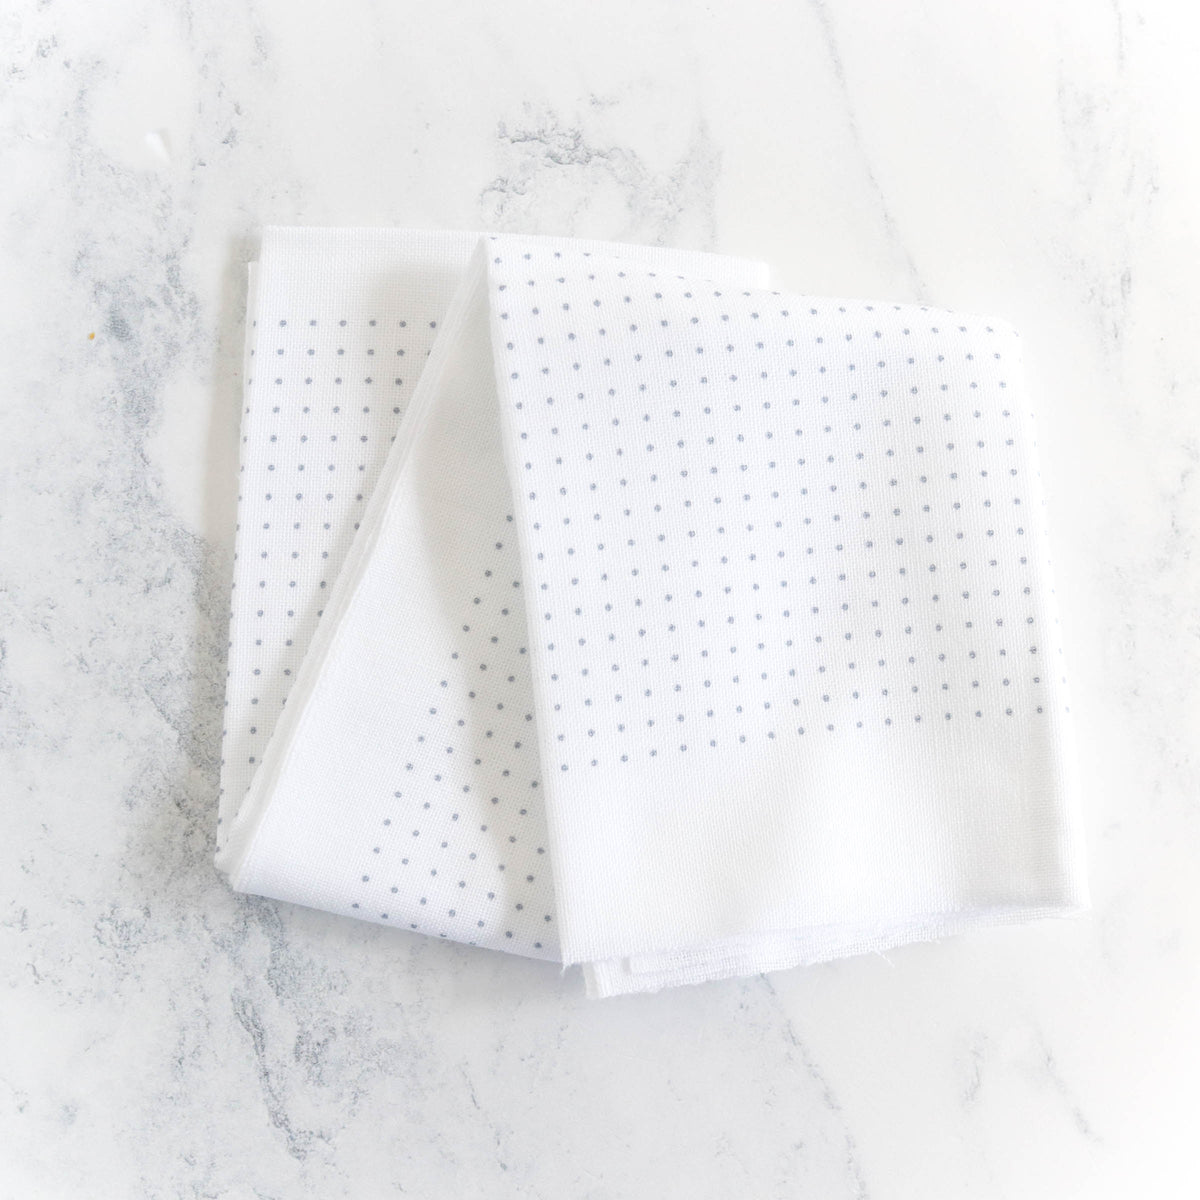 Dot Grid Sashiko Sampler Fabric